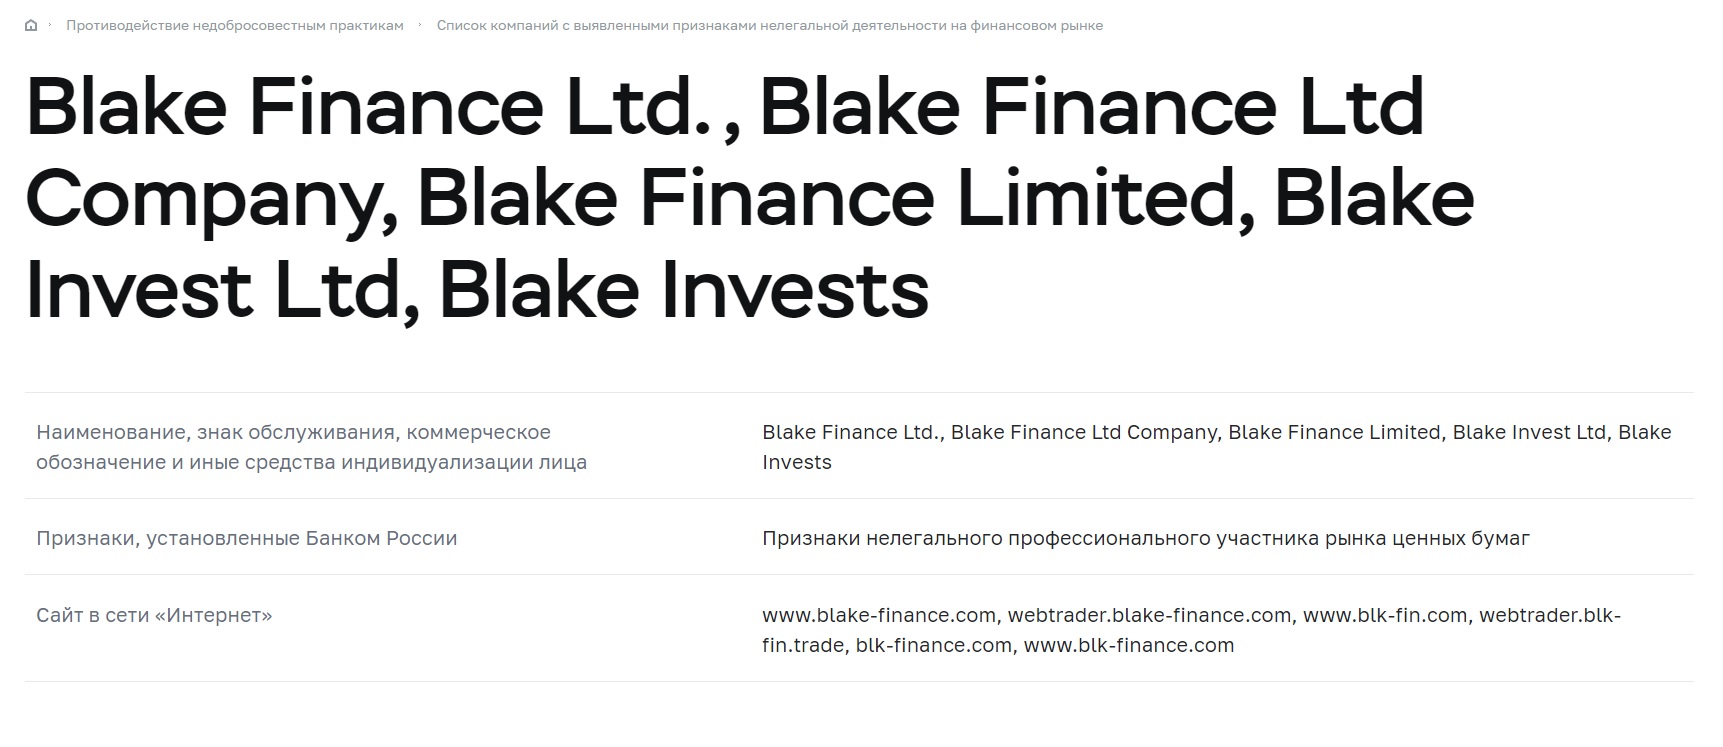 Blake Finance — брокер, работающий в тени